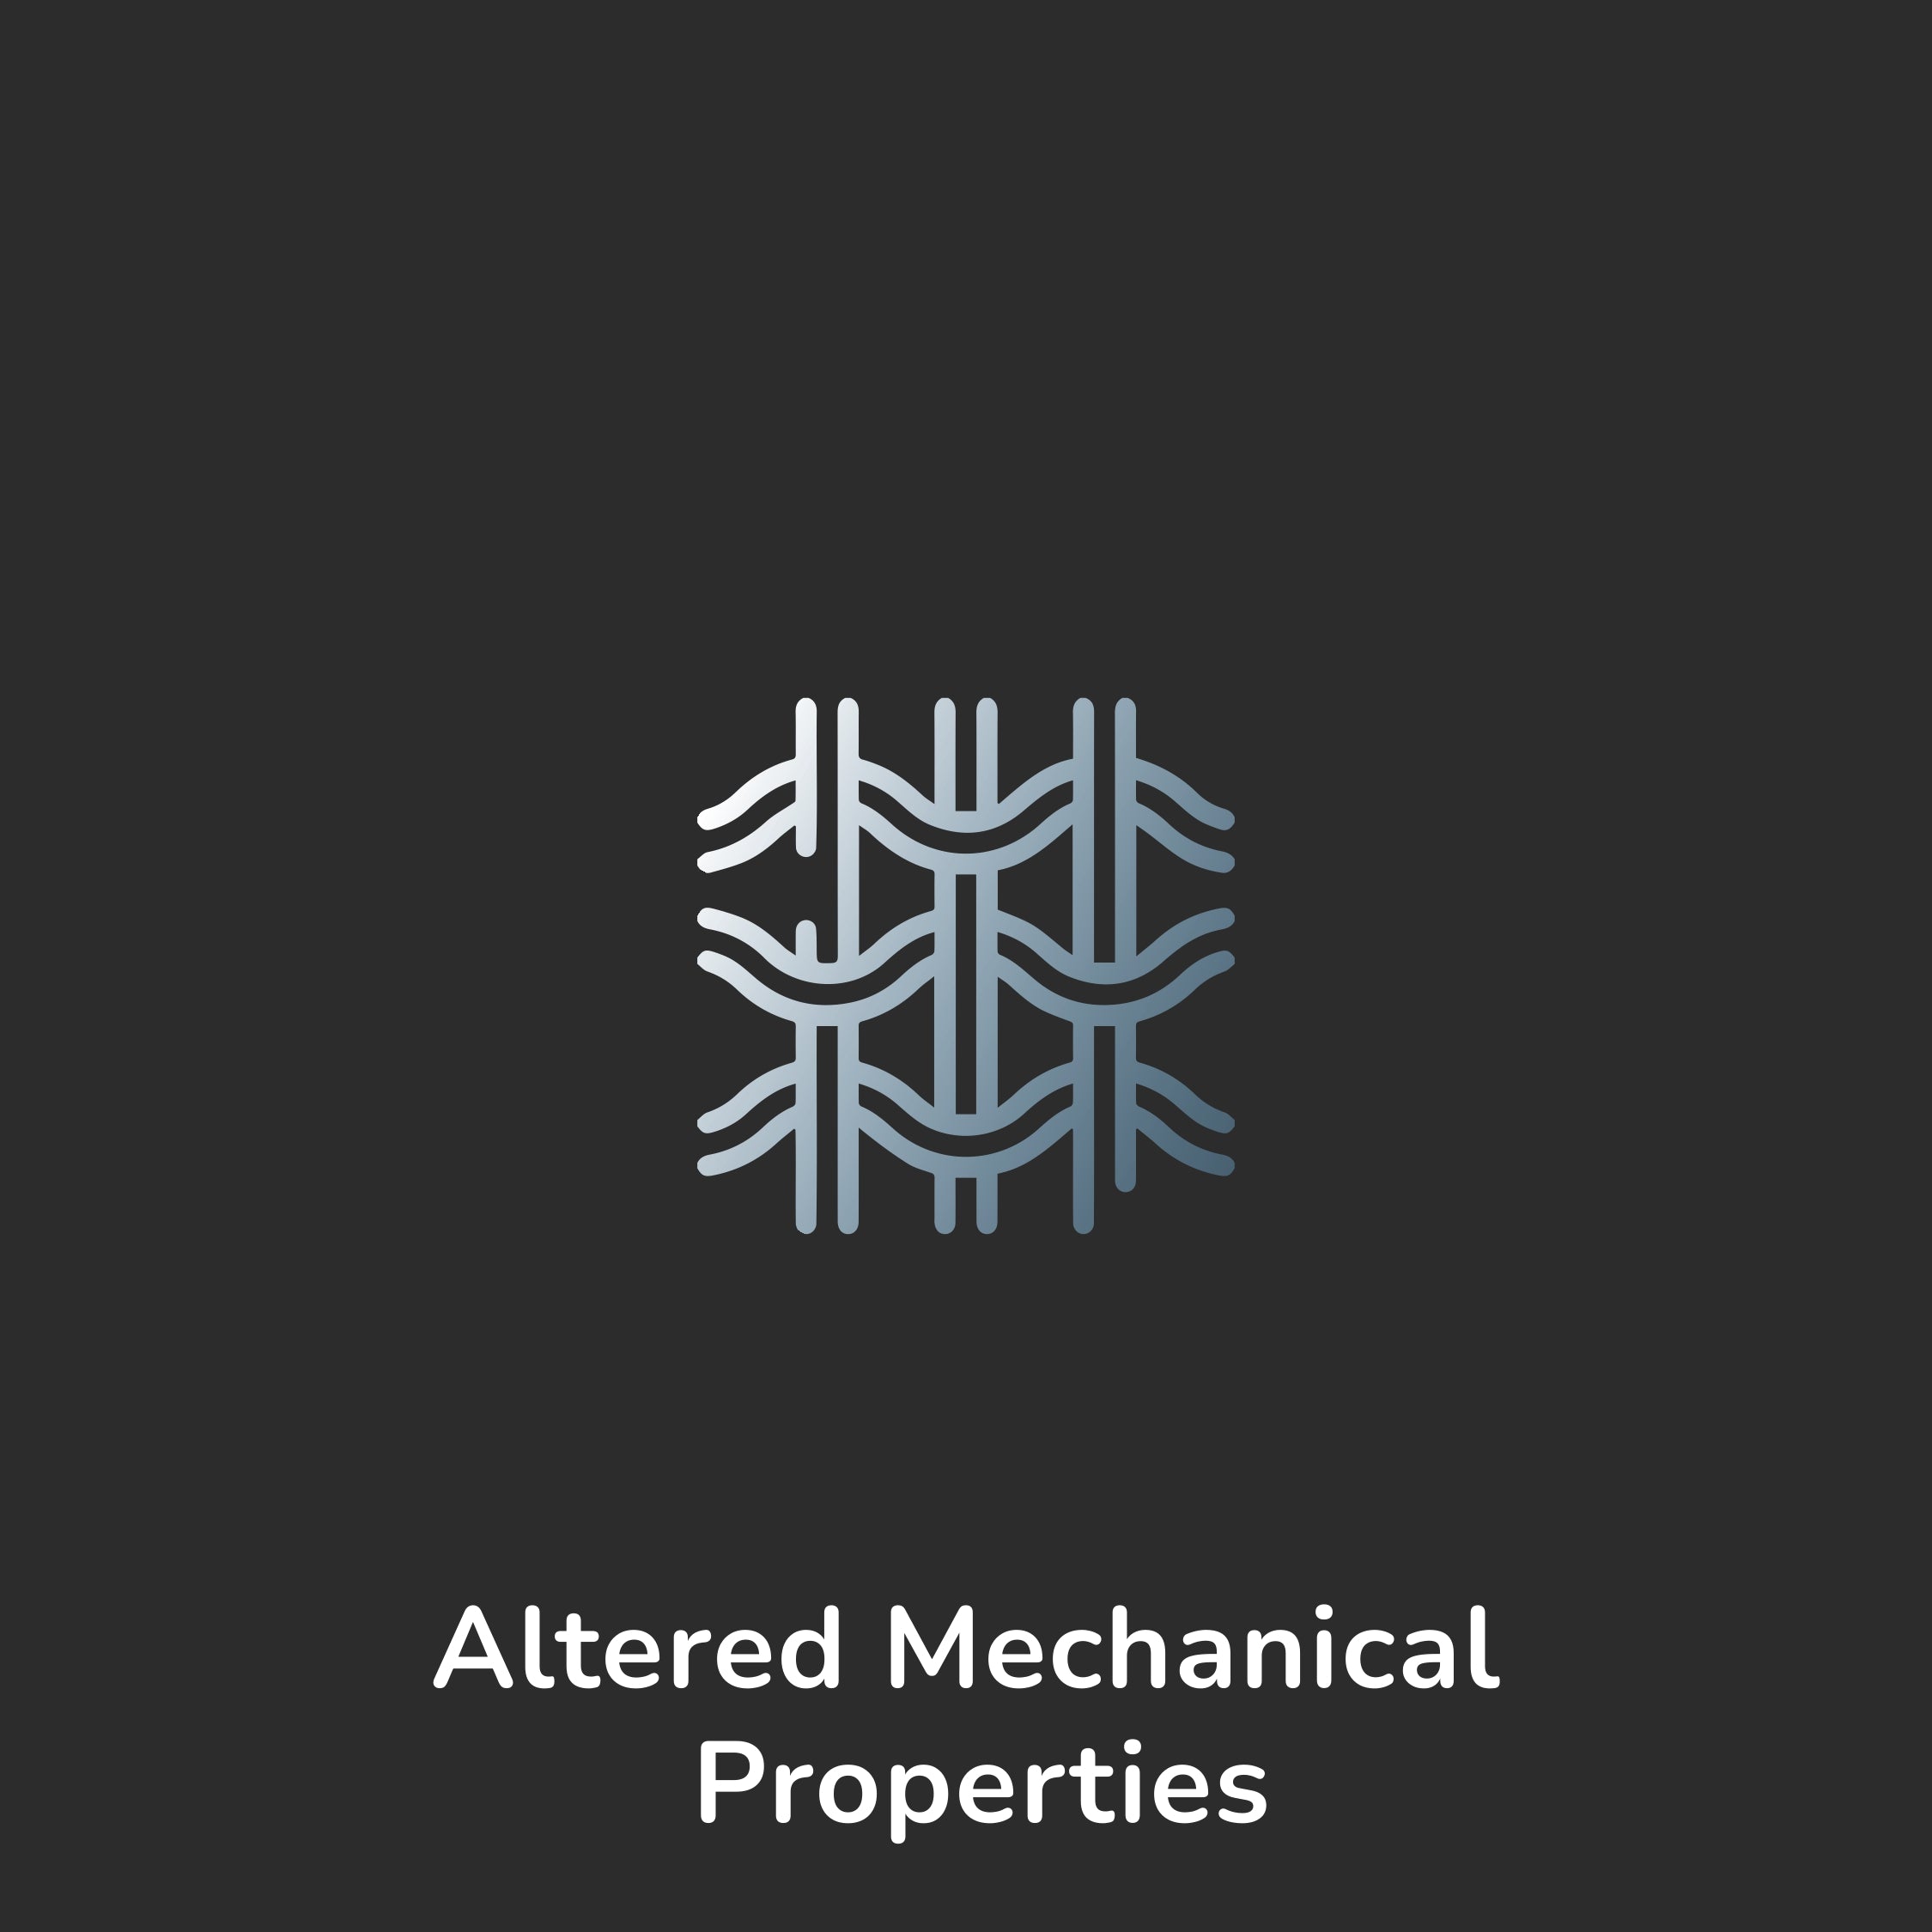 Aging Hallmark - Altered Mechanical Properties